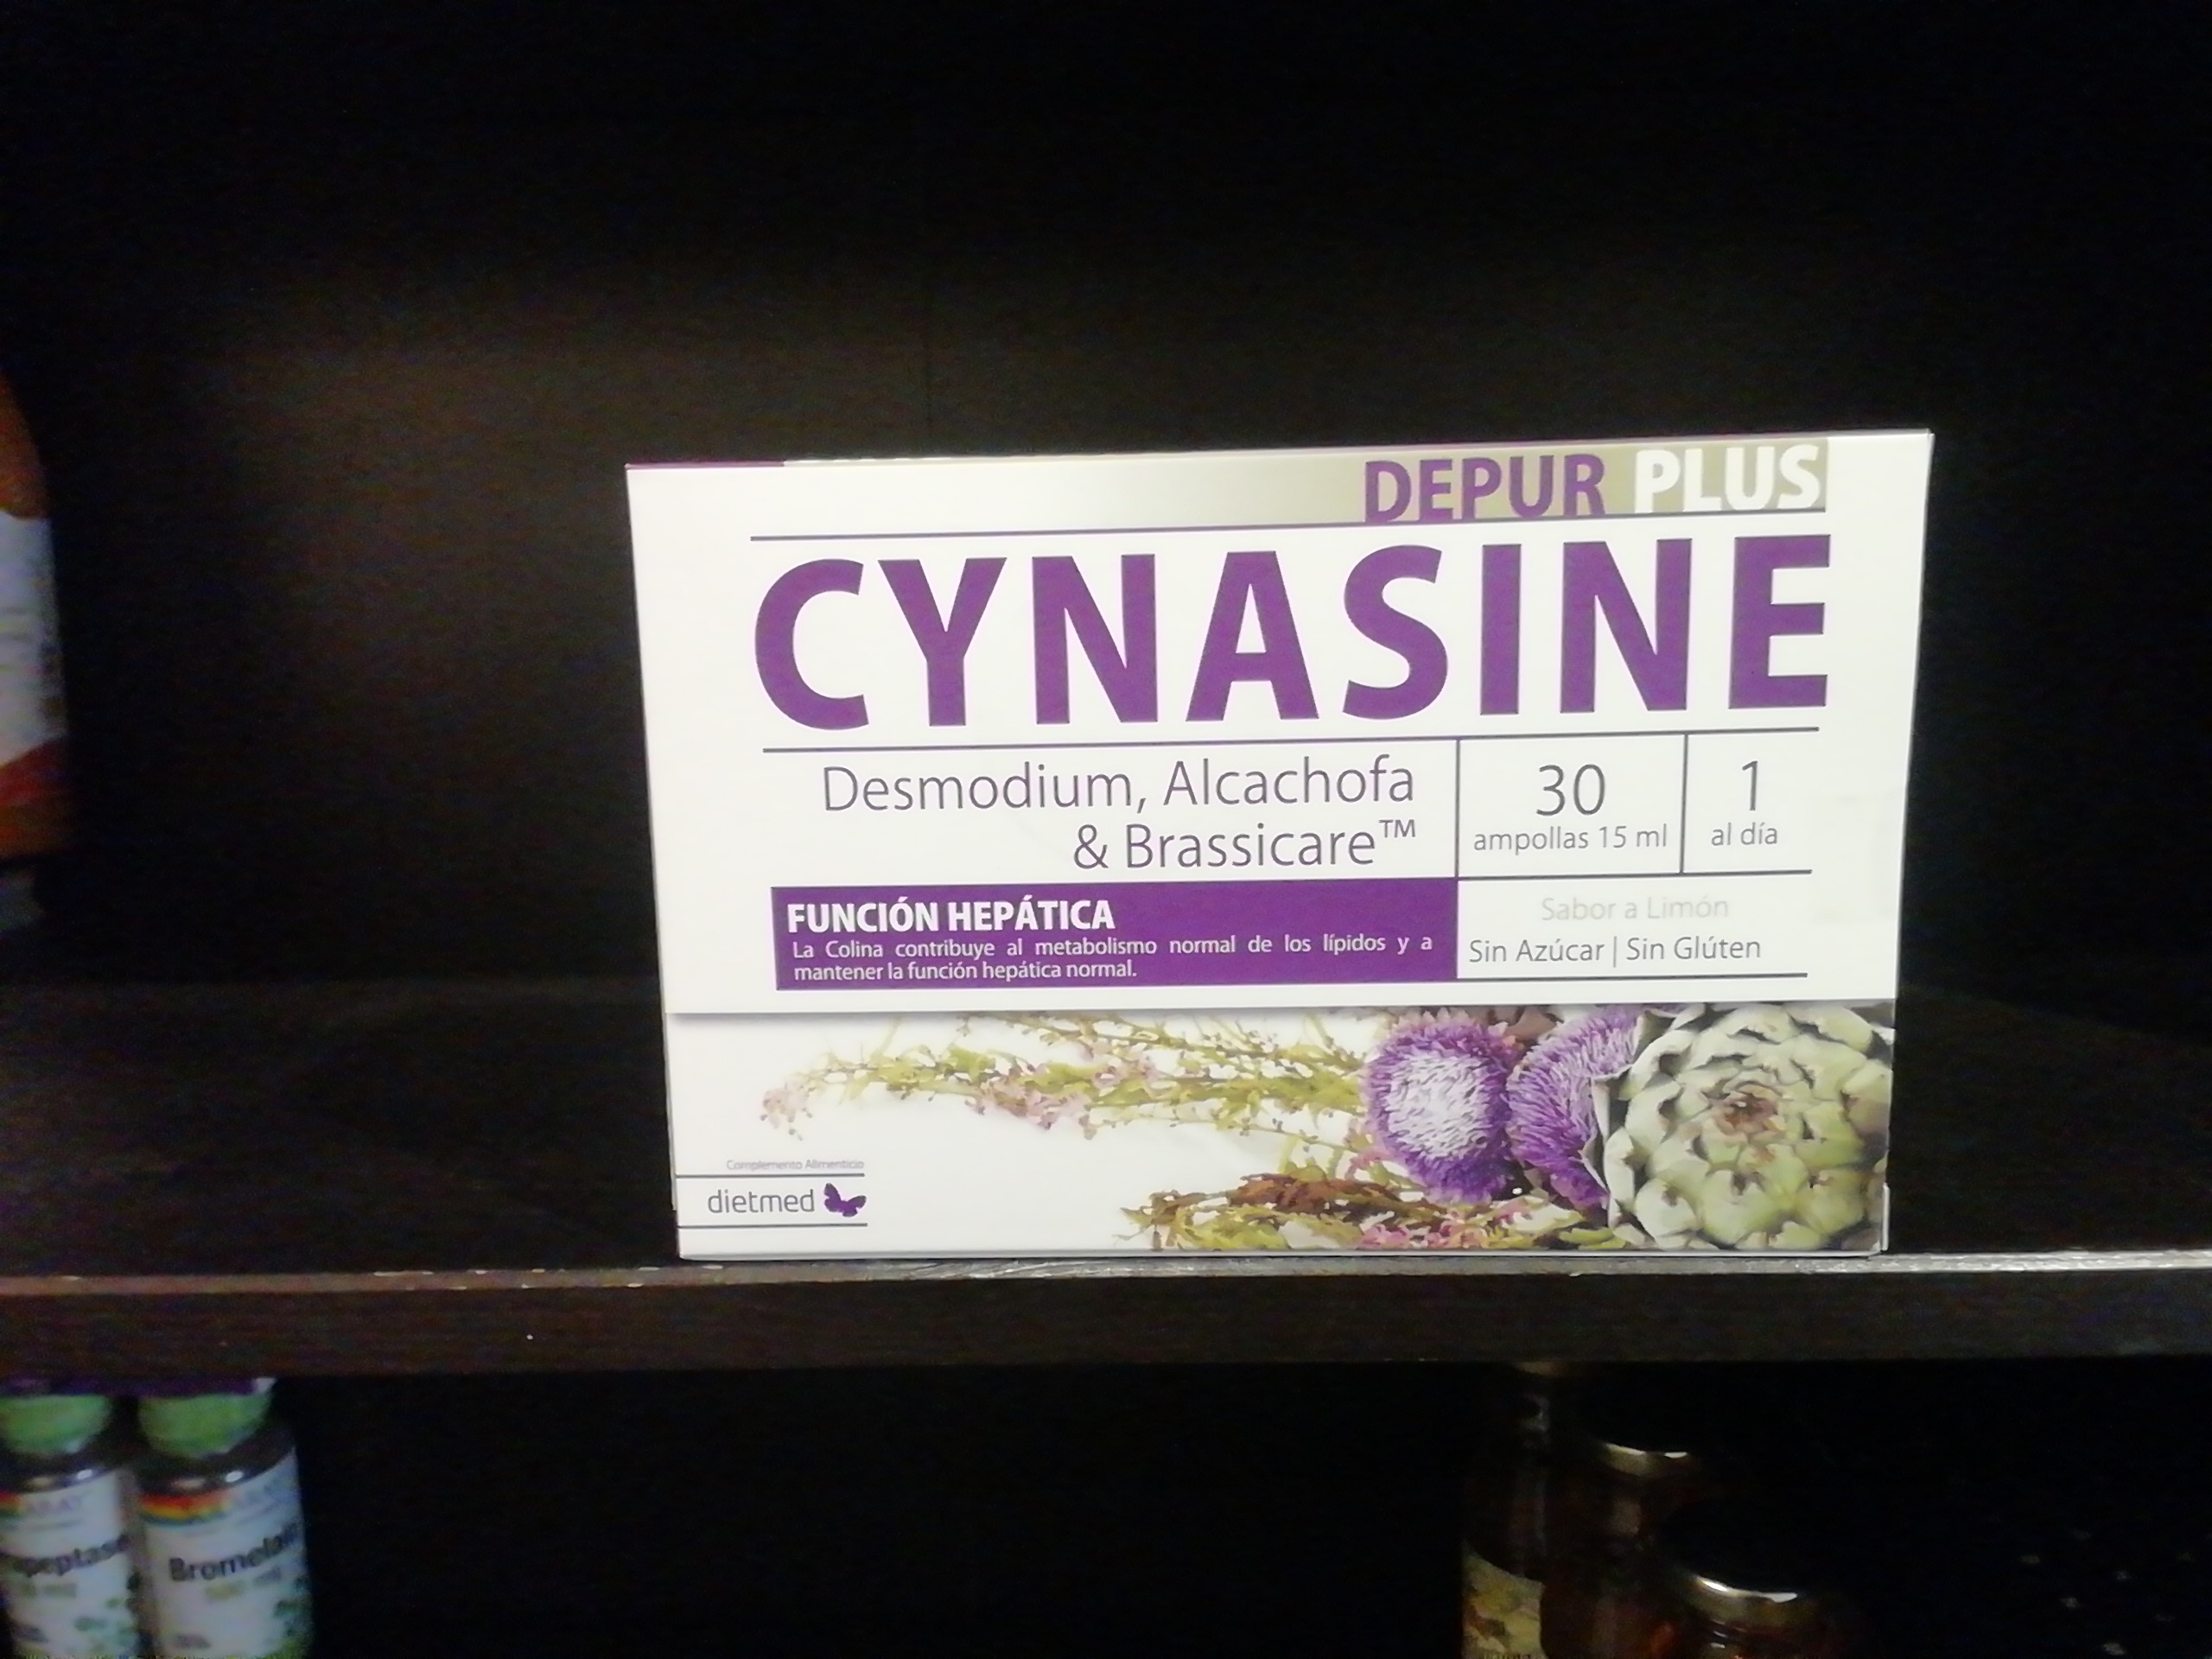 Cynasine Depur Plus 30 ampolas Dietmed 